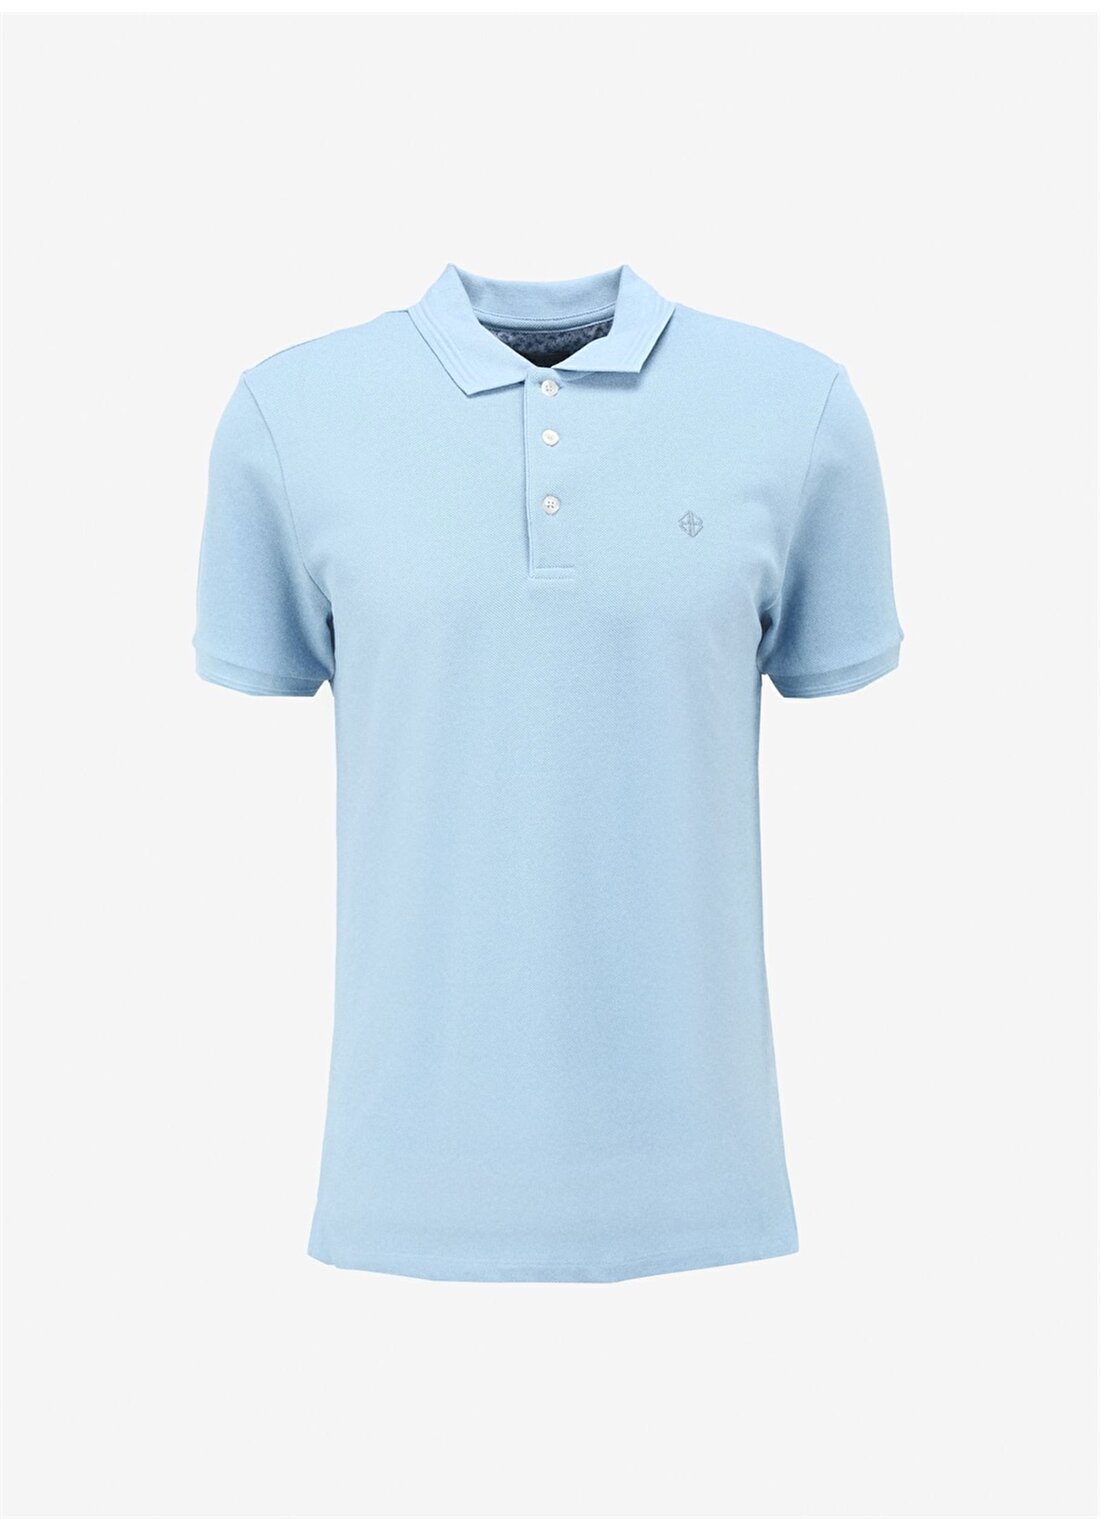 Beymen Business Açık Mavi Erkek Polo T-Shirt 4B4800000001